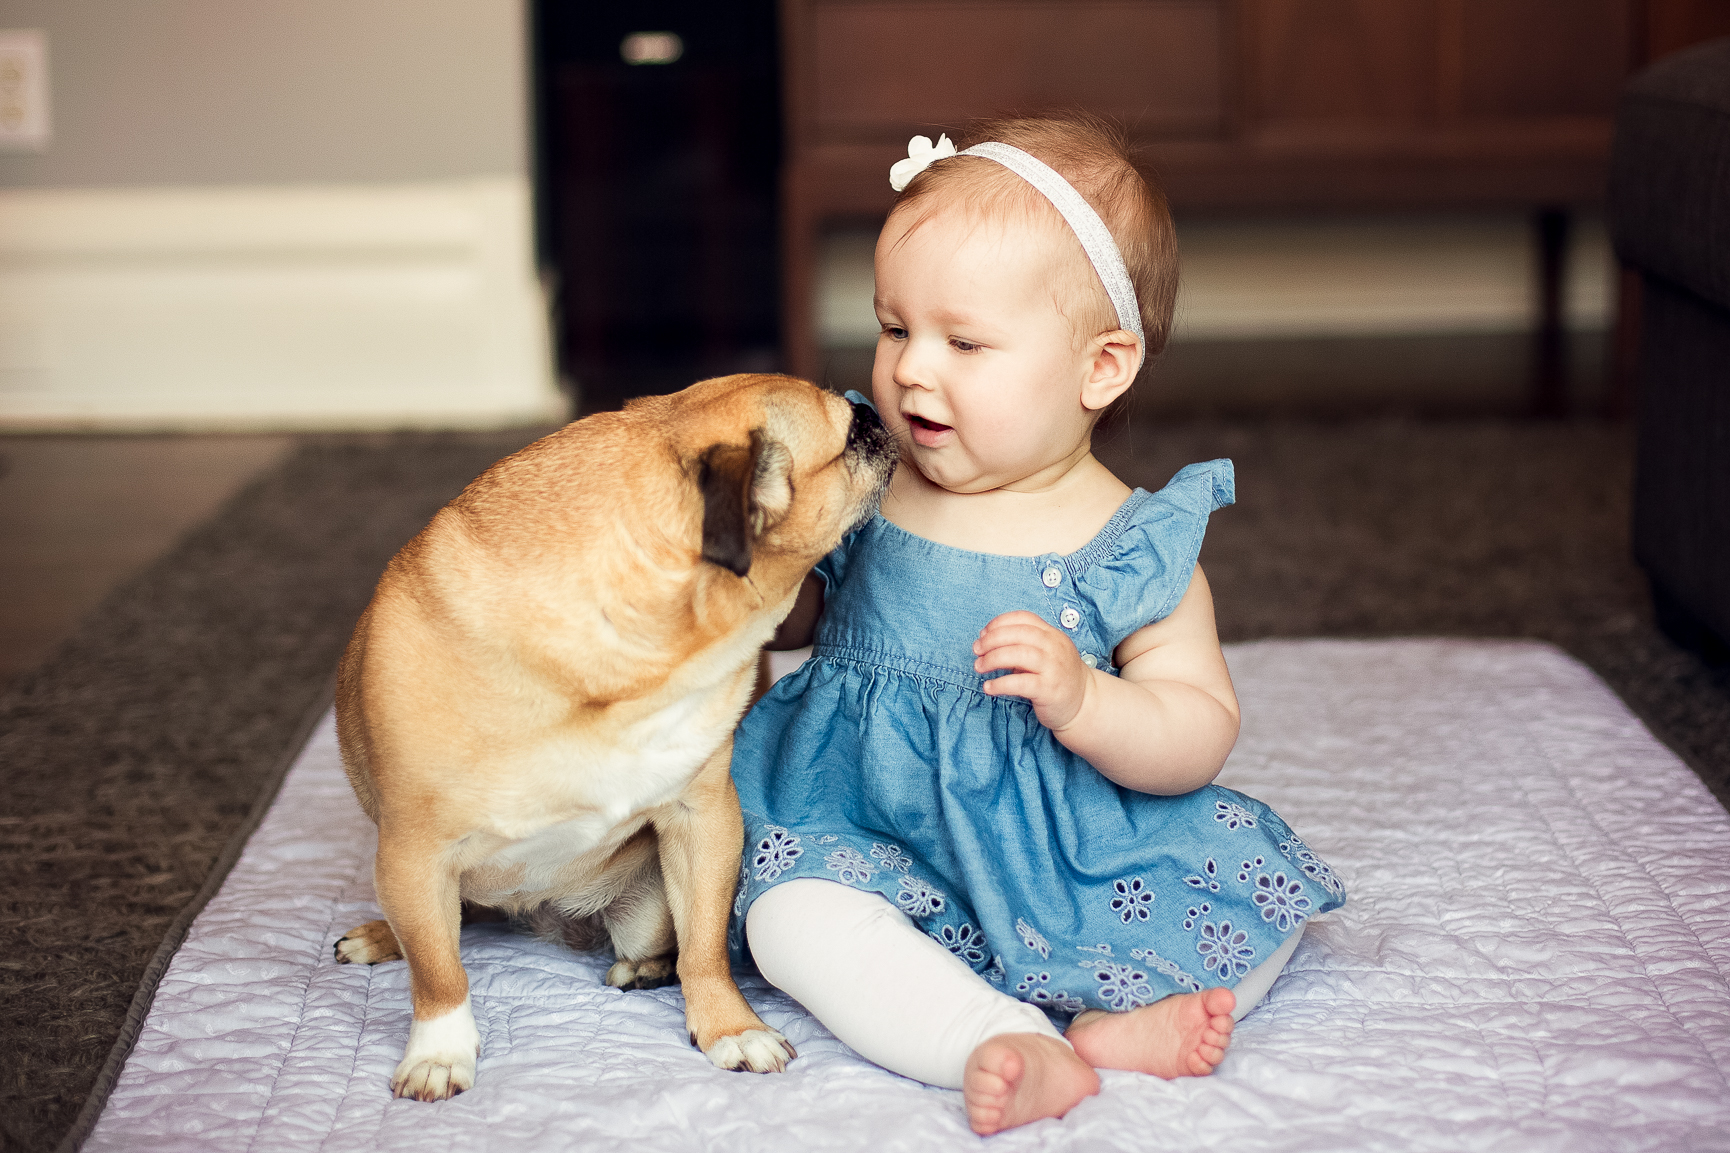 Toronto Baby Photography - Baby girl sitting on rug with pet dog